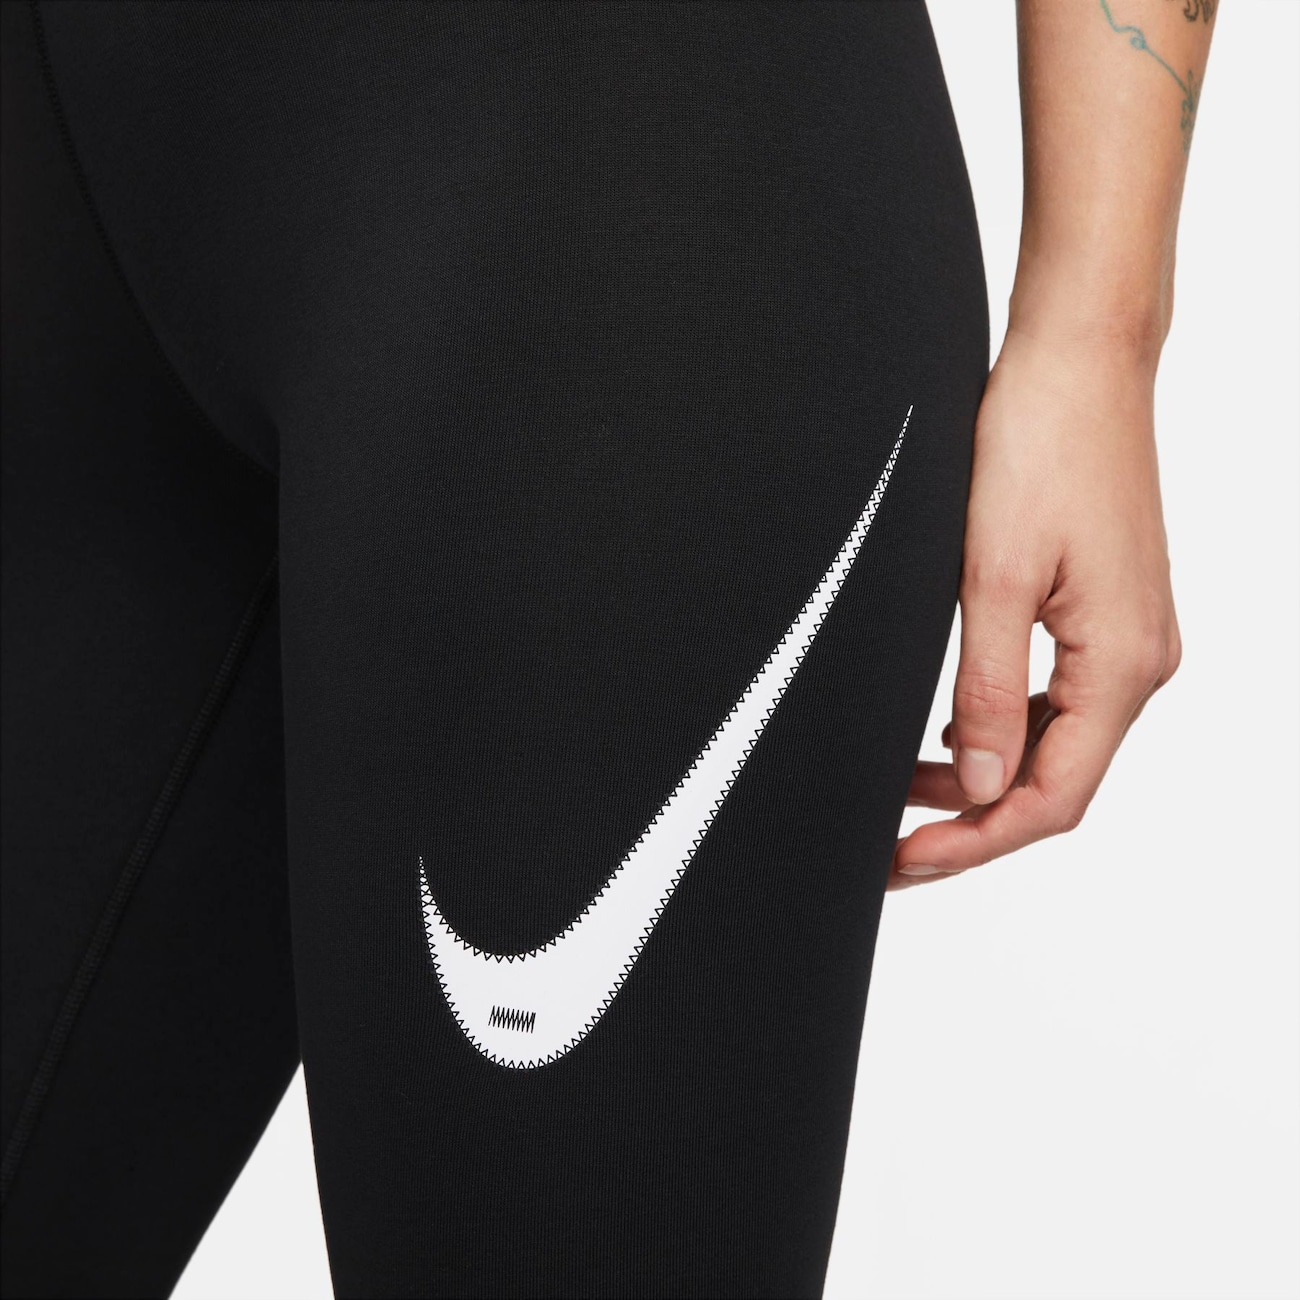 Legging Nike Sportswear Swoosh Feminina - Compre Agora